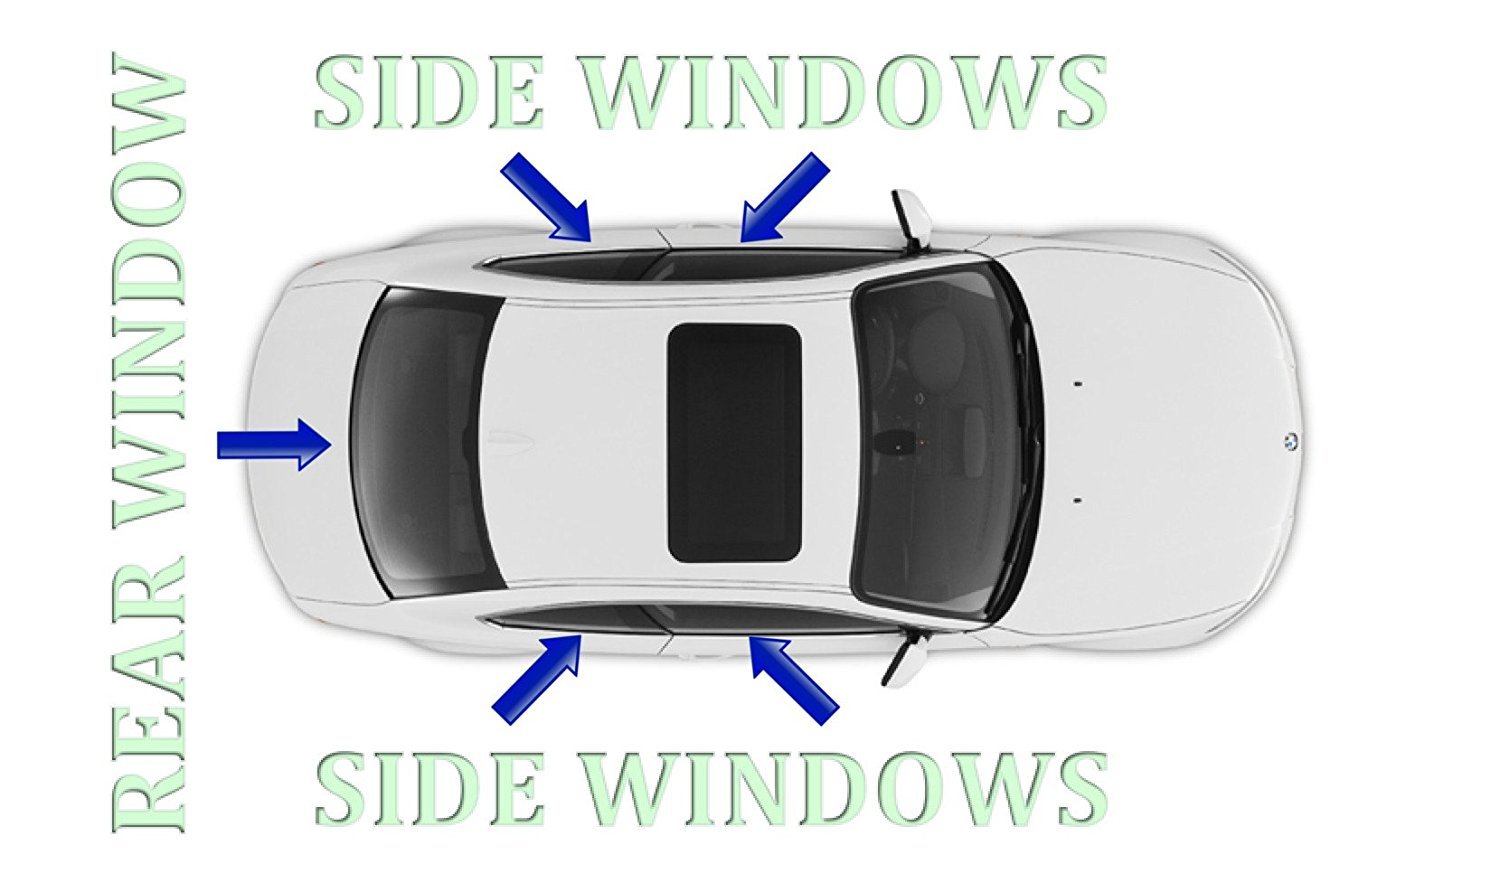 Autotech Park Precut Window Tinting Film for 2019-2020 Hyundai Accent Hatchback